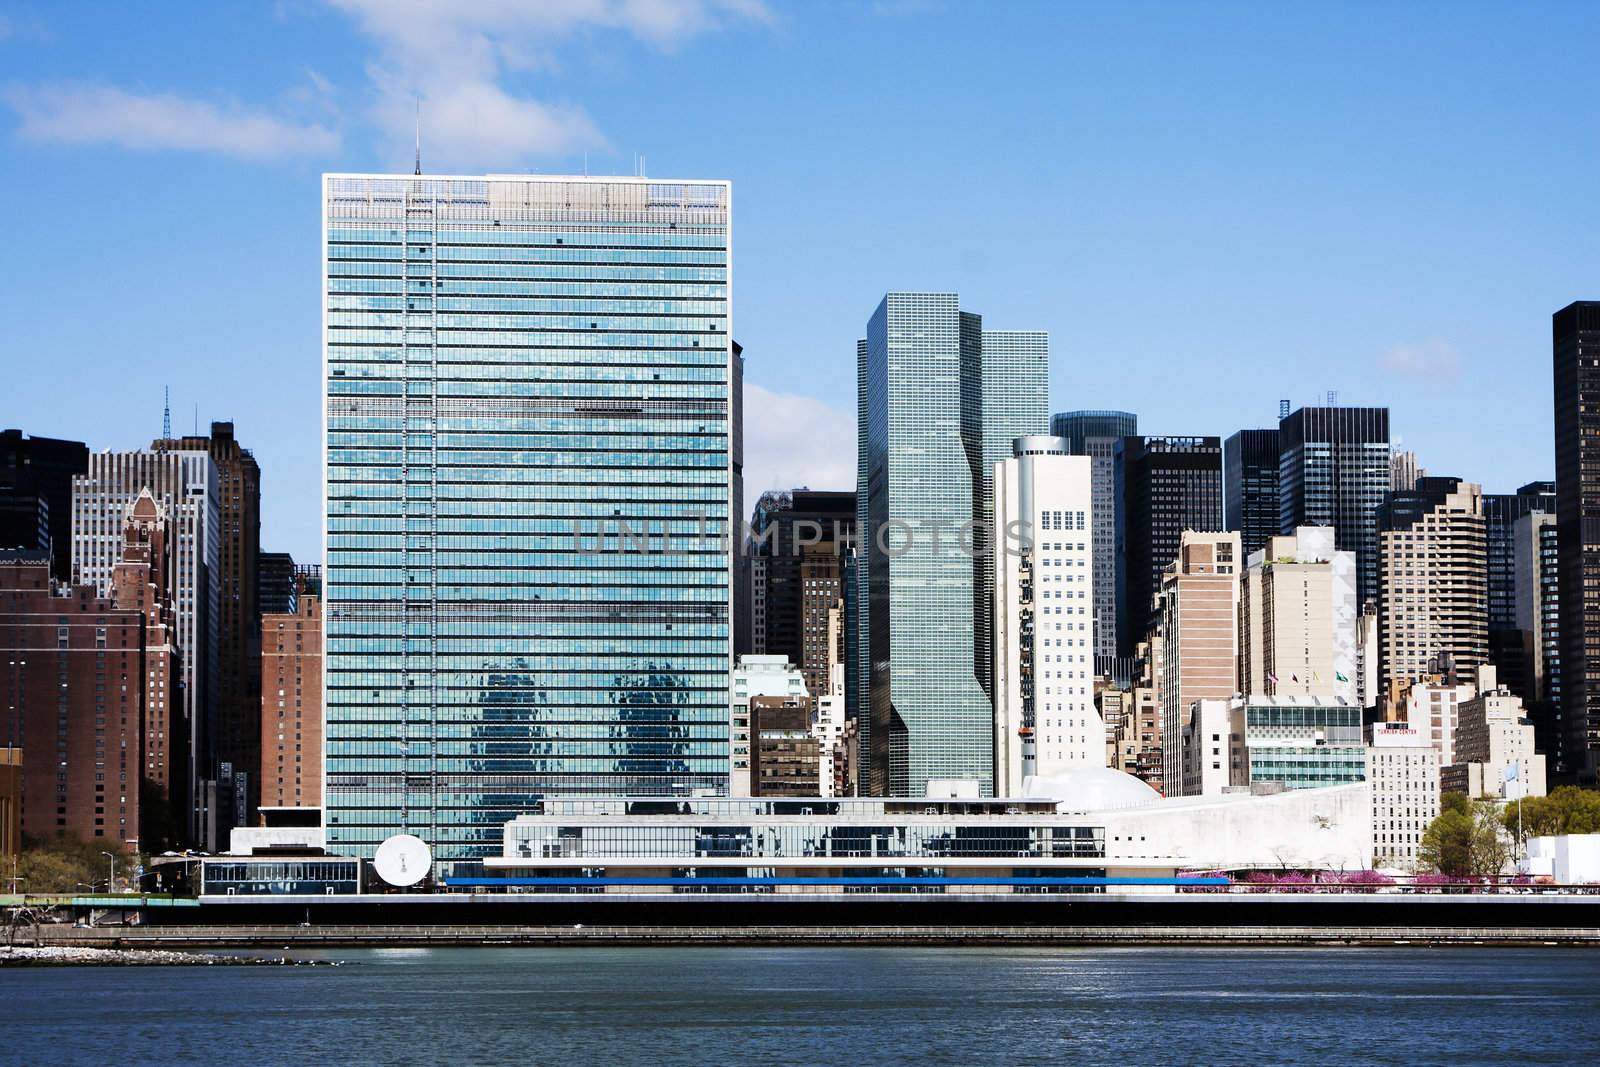 United Nations headquarters - New York City by phakimata